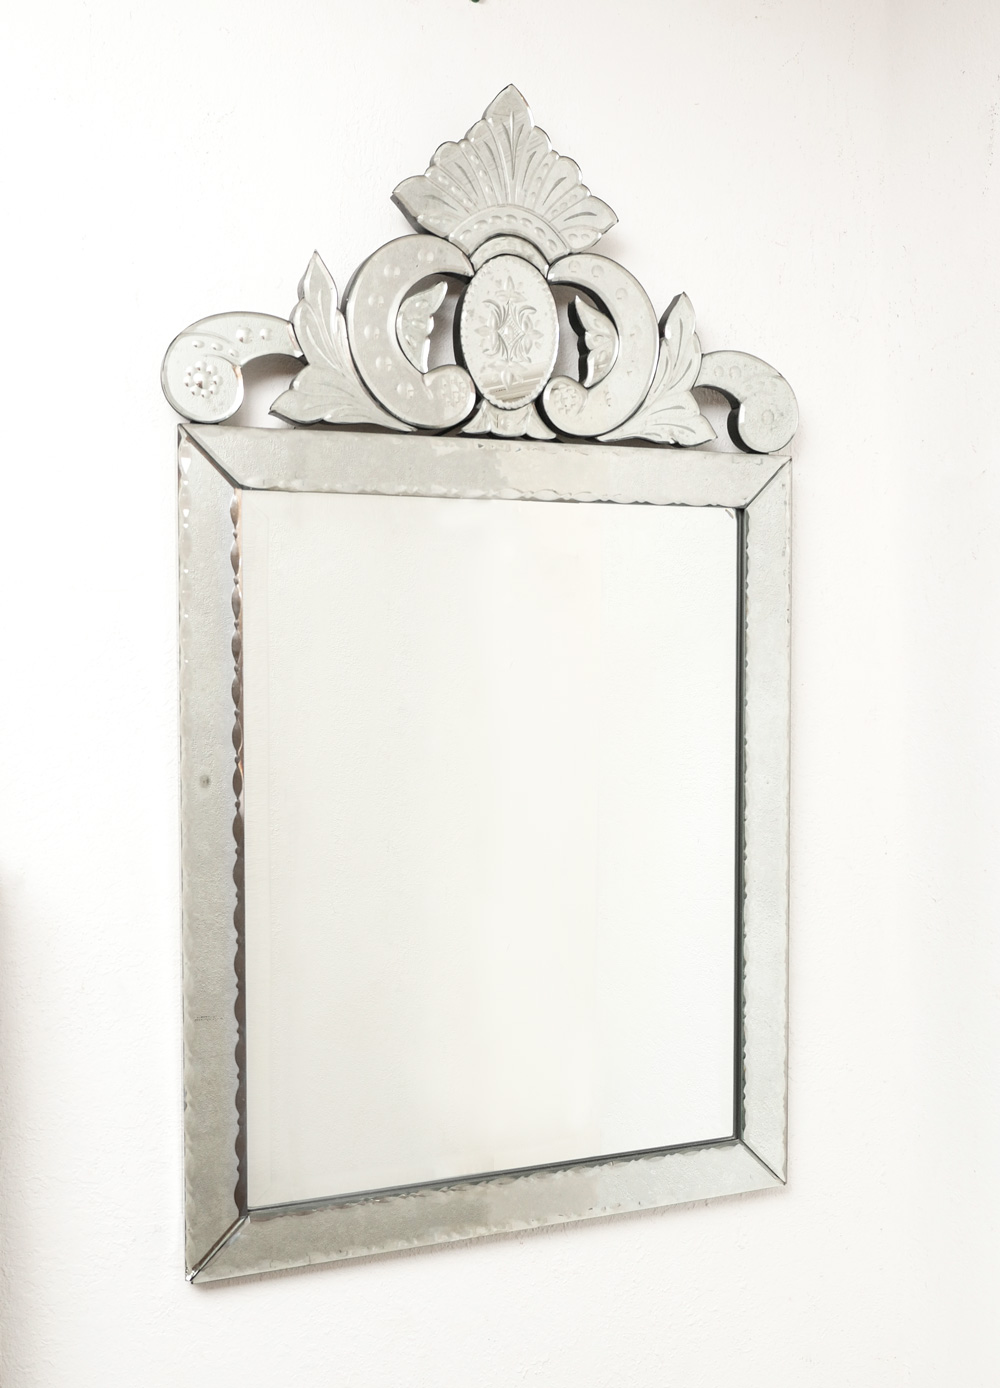 VENETIAN MIRROR: Venetian mirror